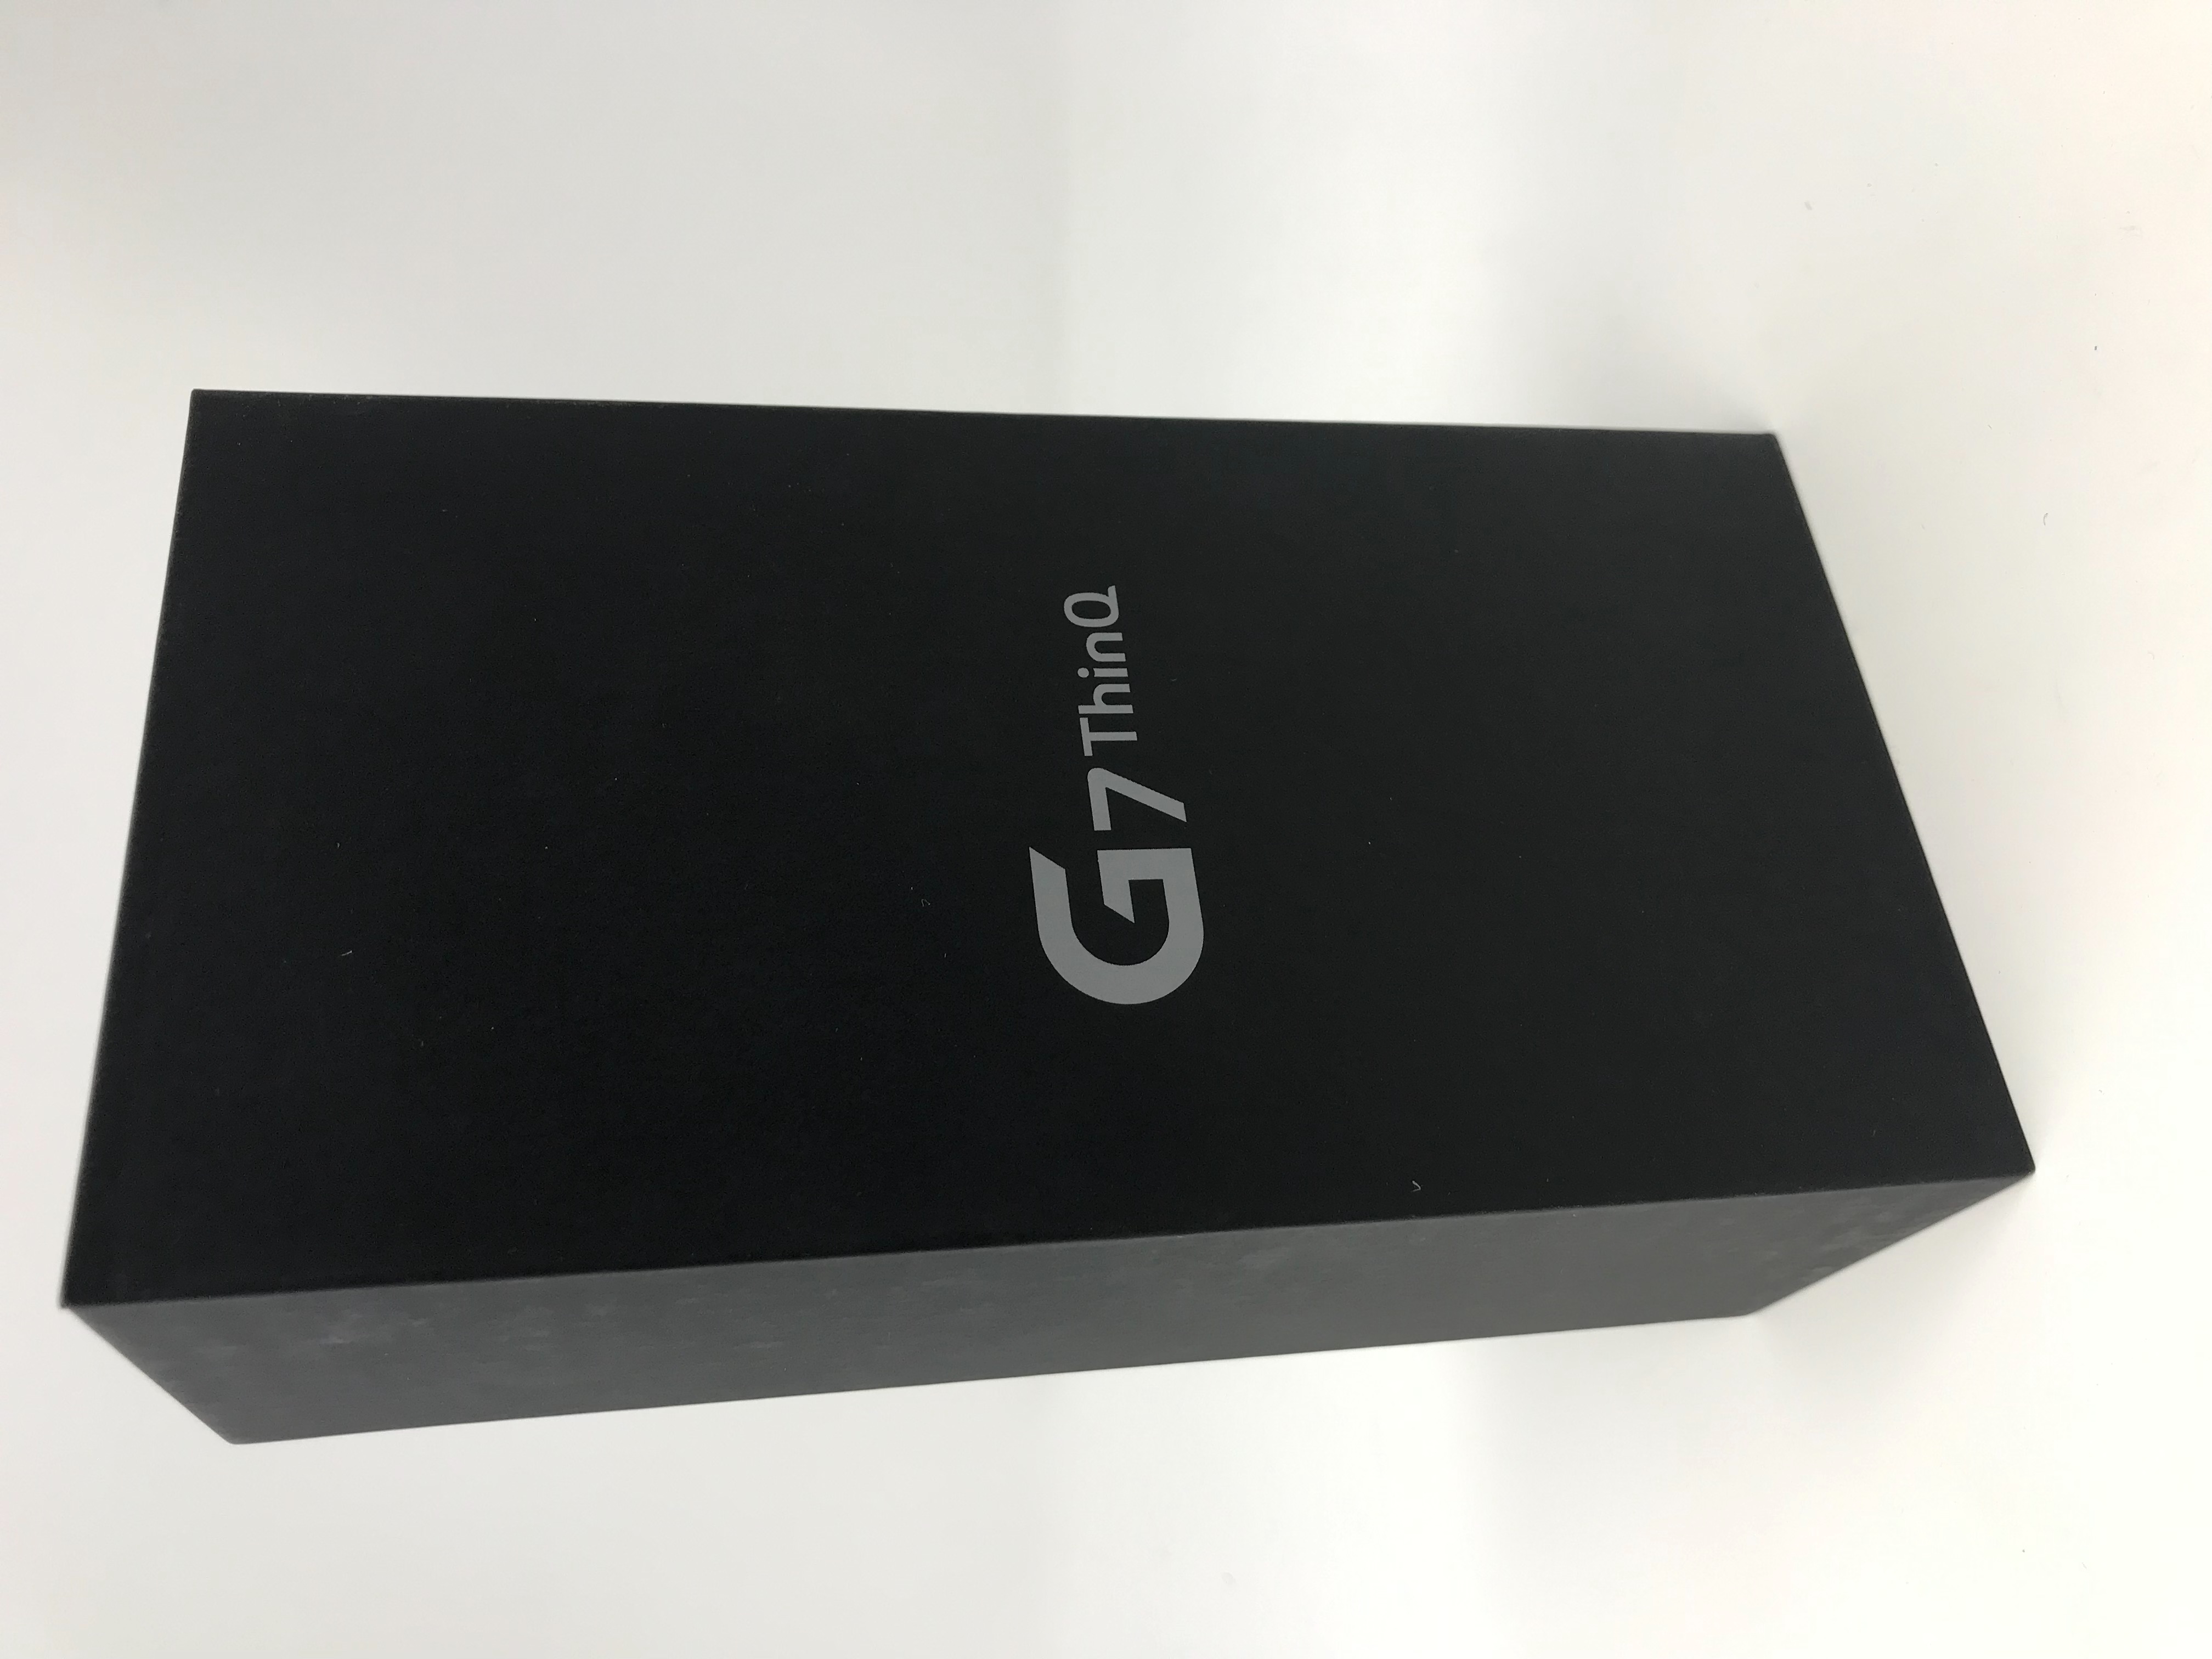 New G7 ThinQ LG G710ULM 64GB GSM GLOBAL Unlocked Smartphone - Platinum Gray - image 2 of 2